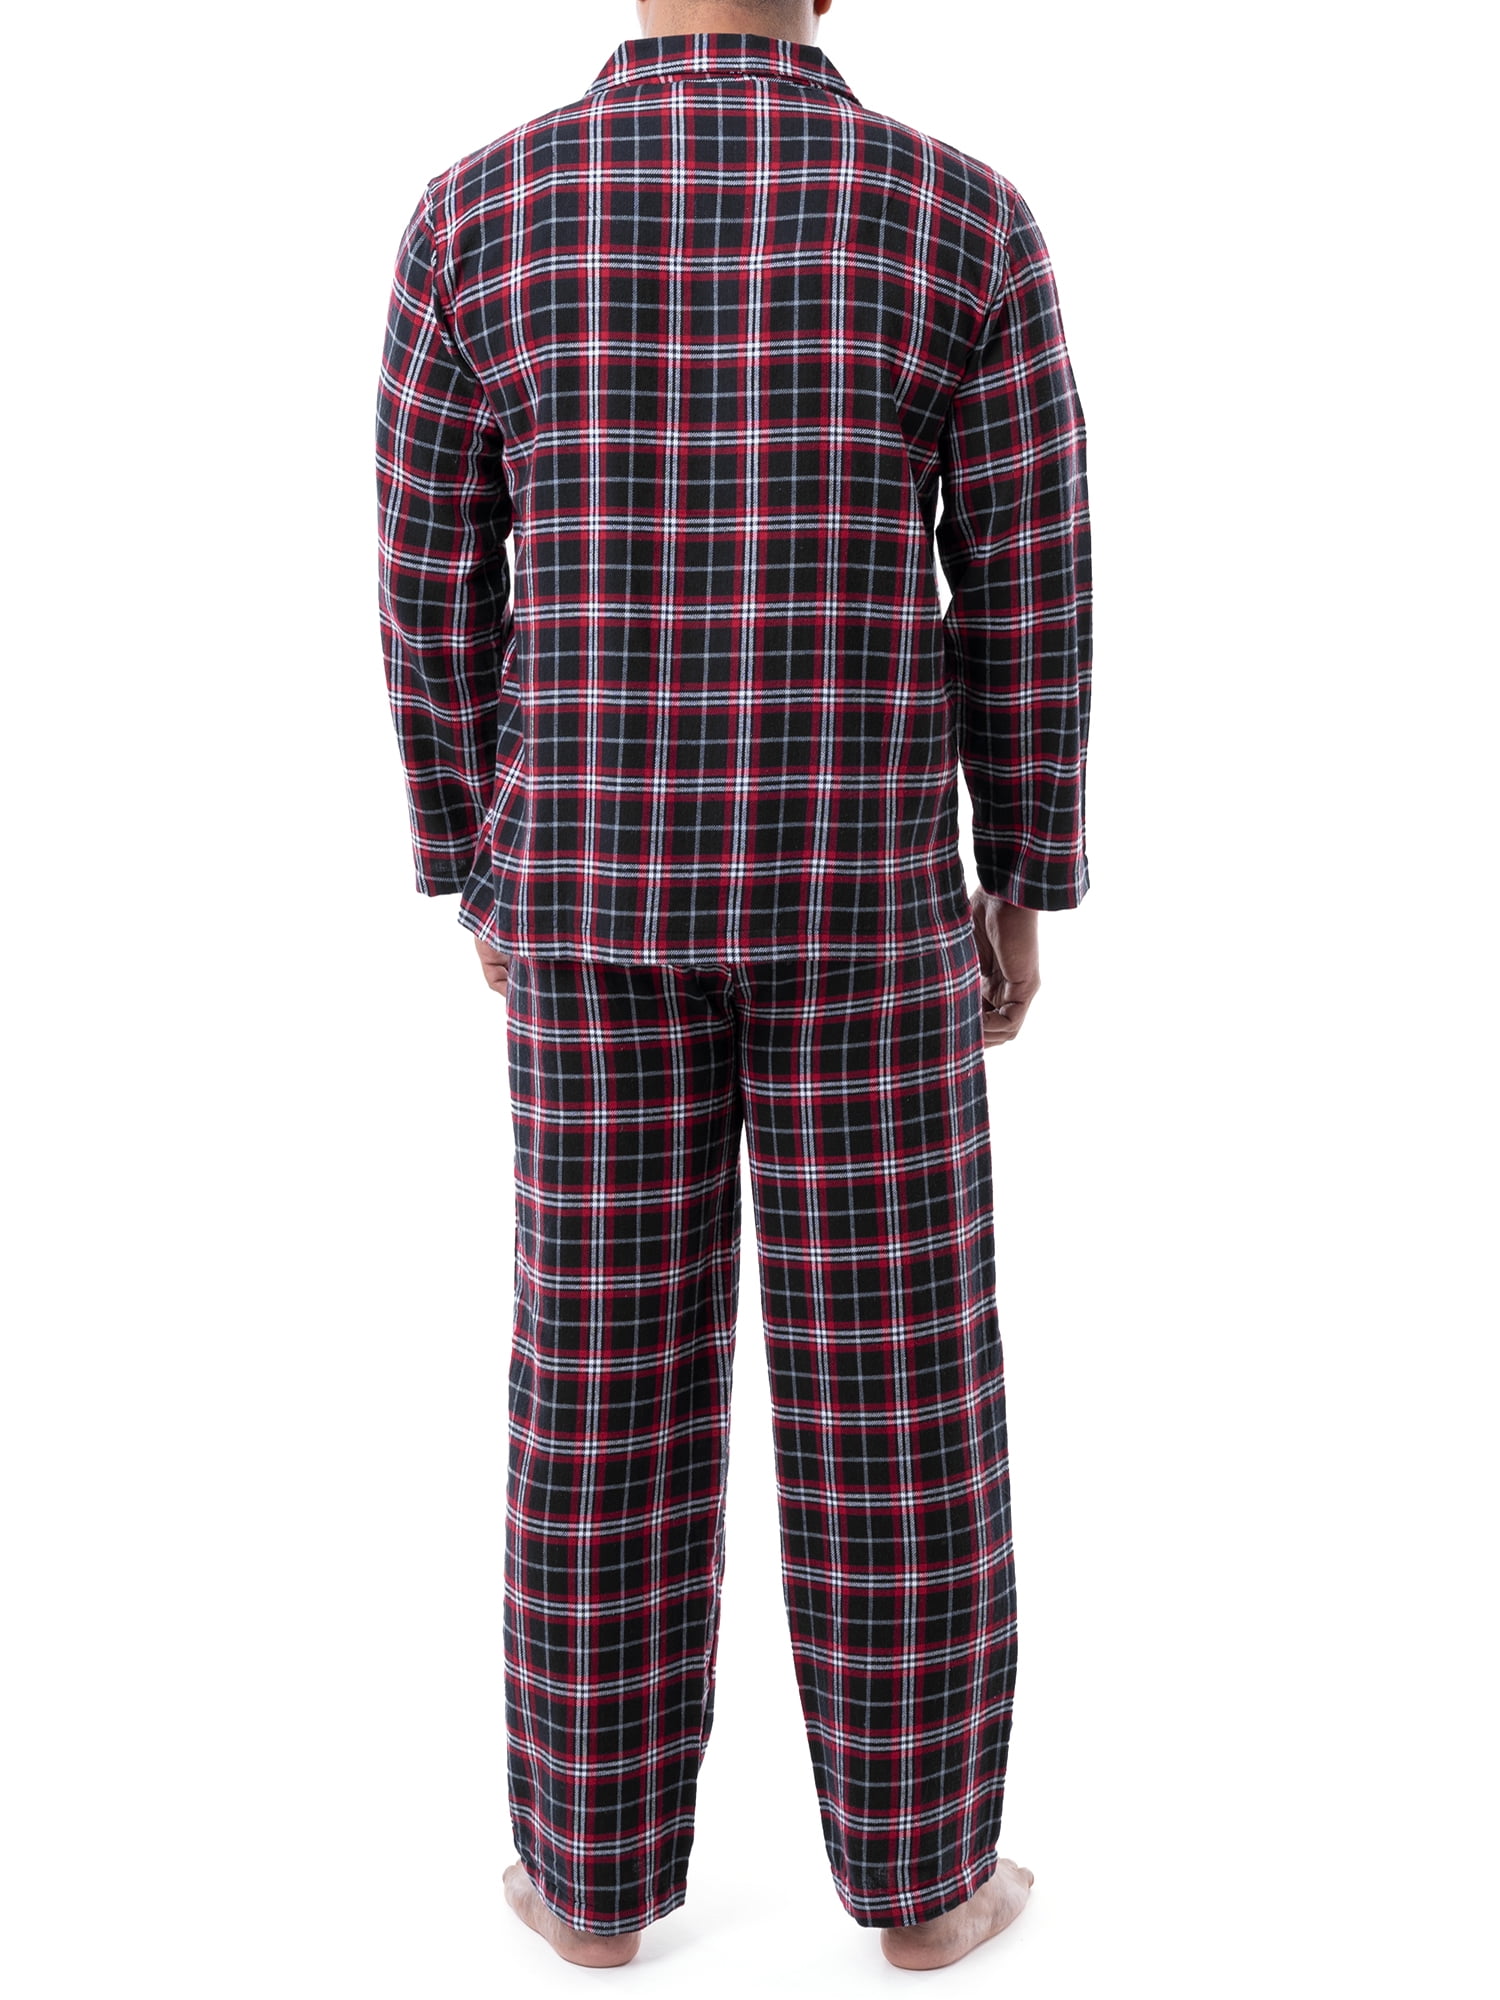 Fruit of the Loom Men's Flannel Pajama Top and Bottom Pajama Set 